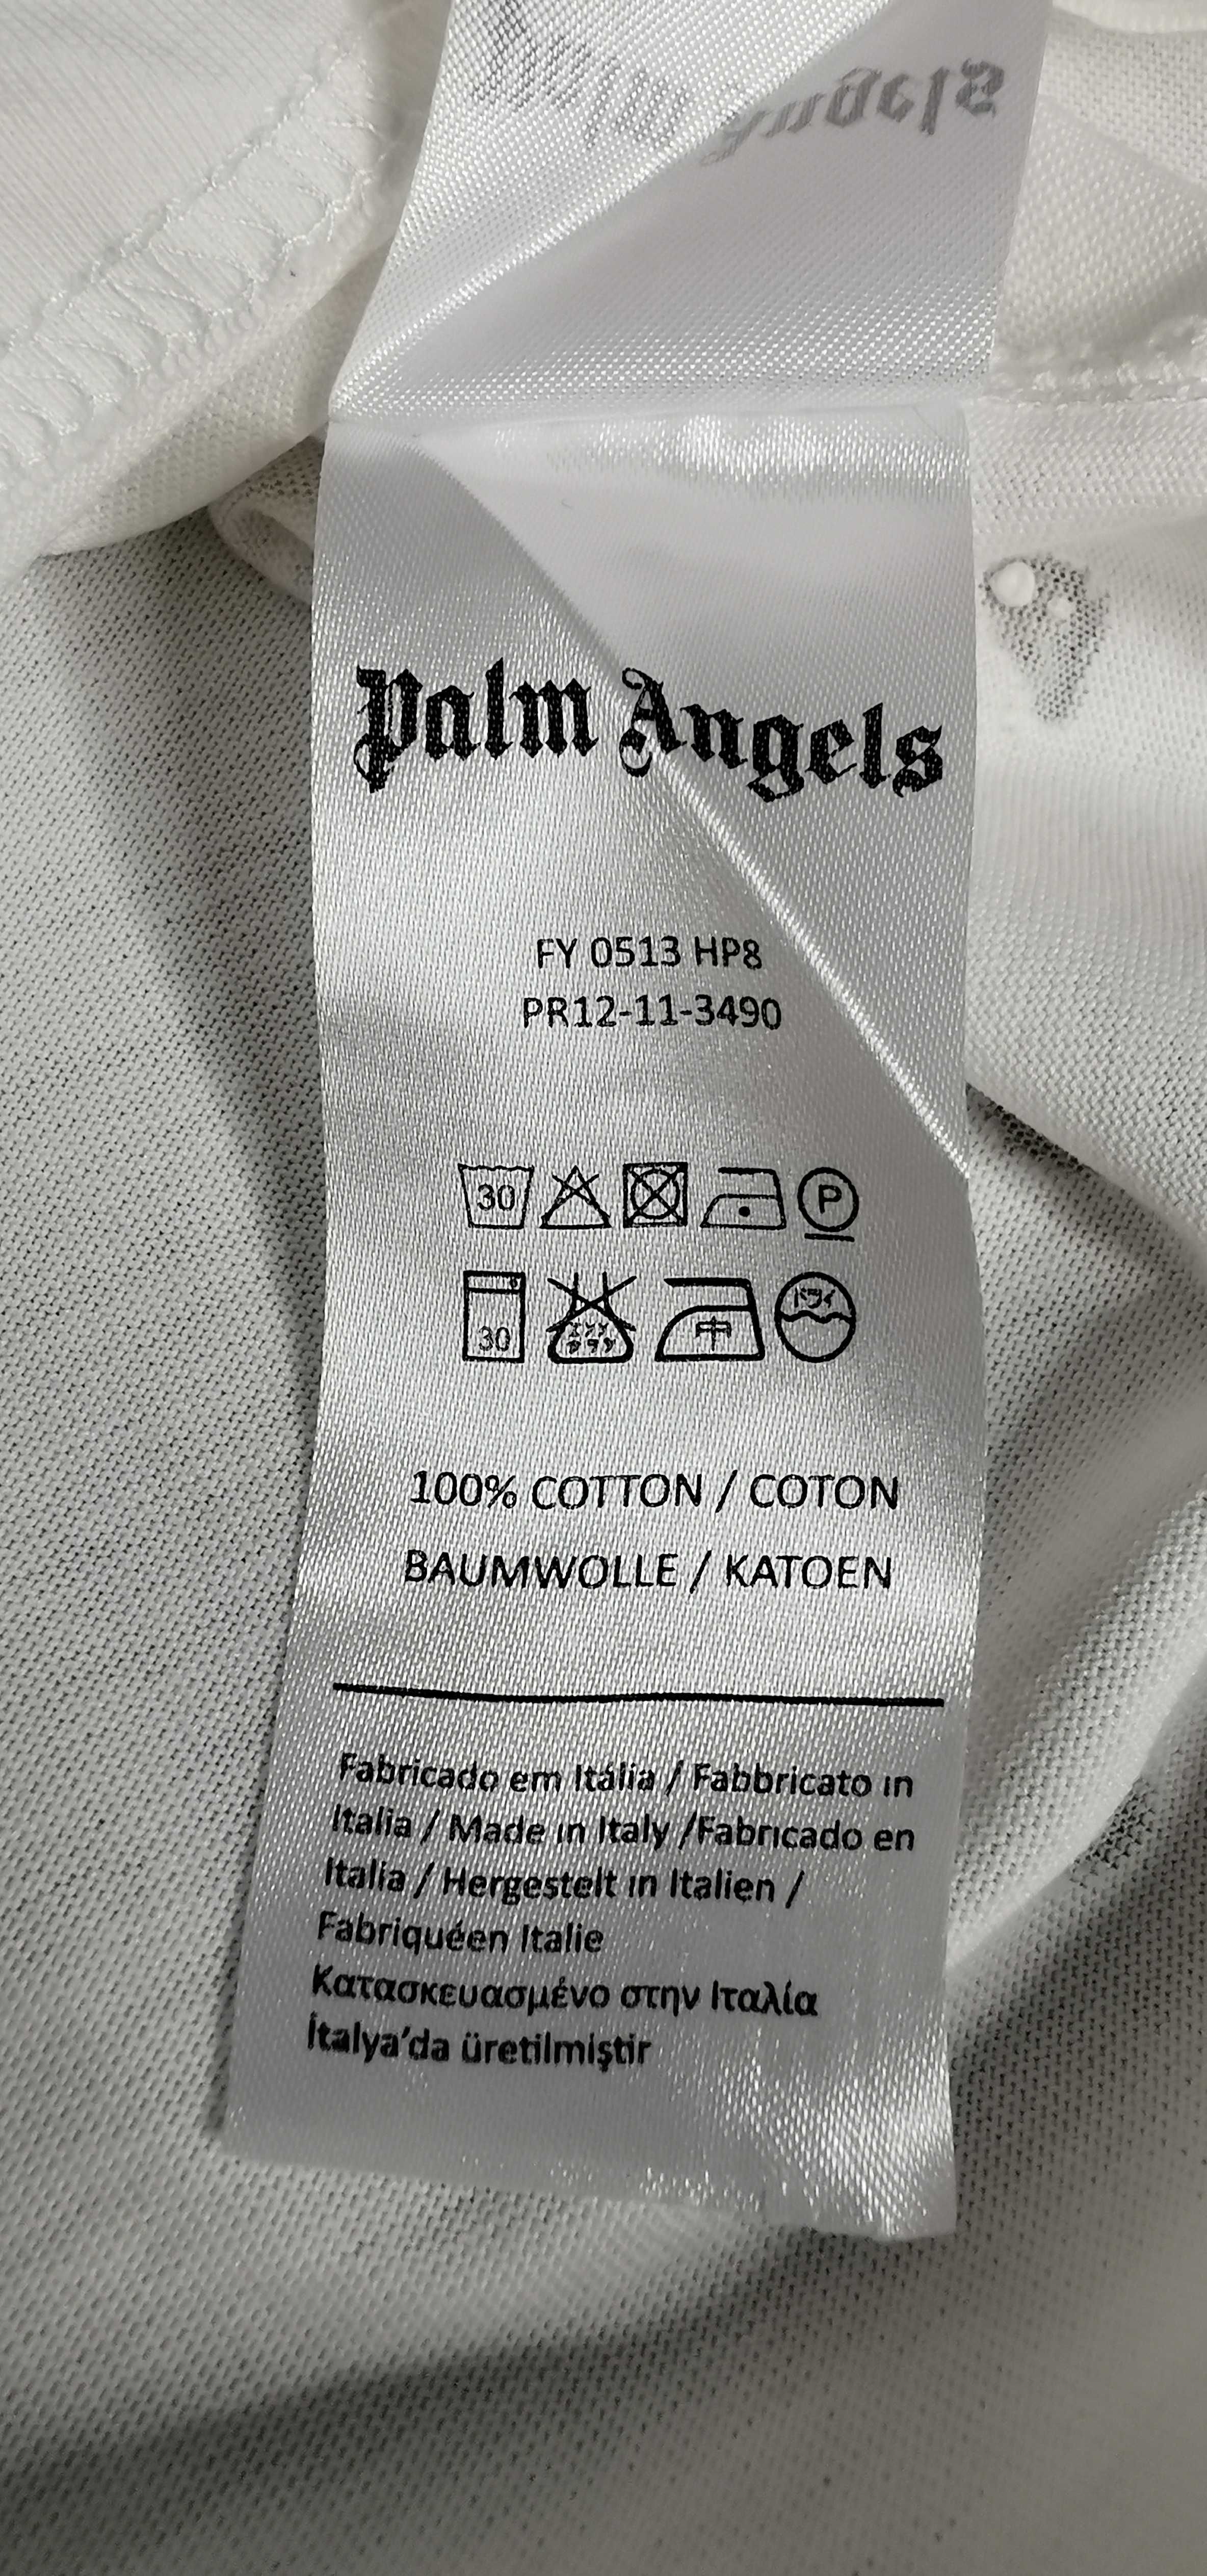 T-shirt koszulka Palm Angels big print duże logo rozmiar M biała white